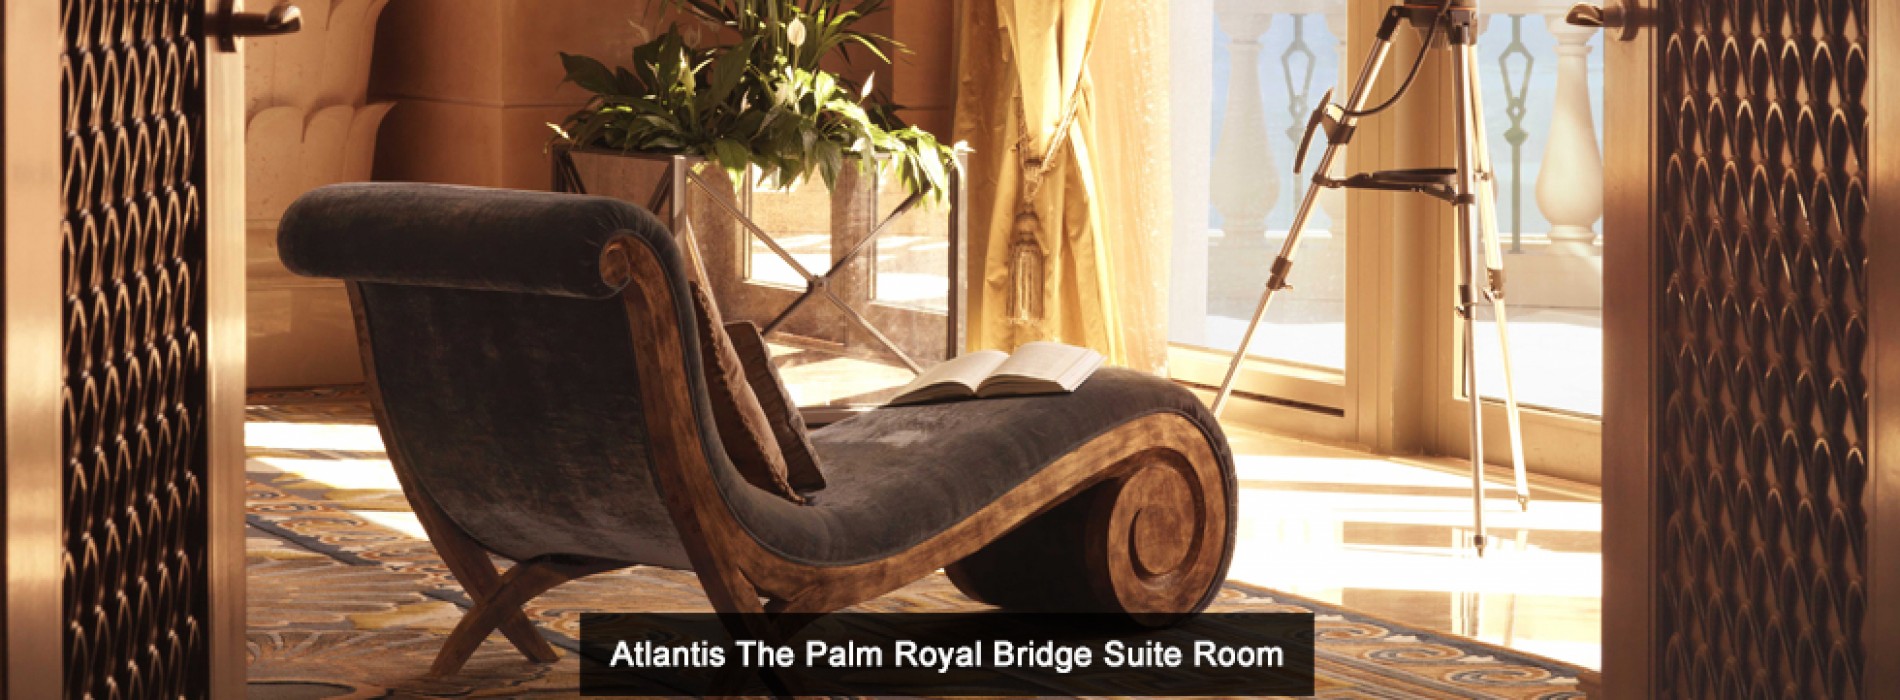 Atlantis, The Palm’s guide to Luxury – inside the Royal Bridge Suite